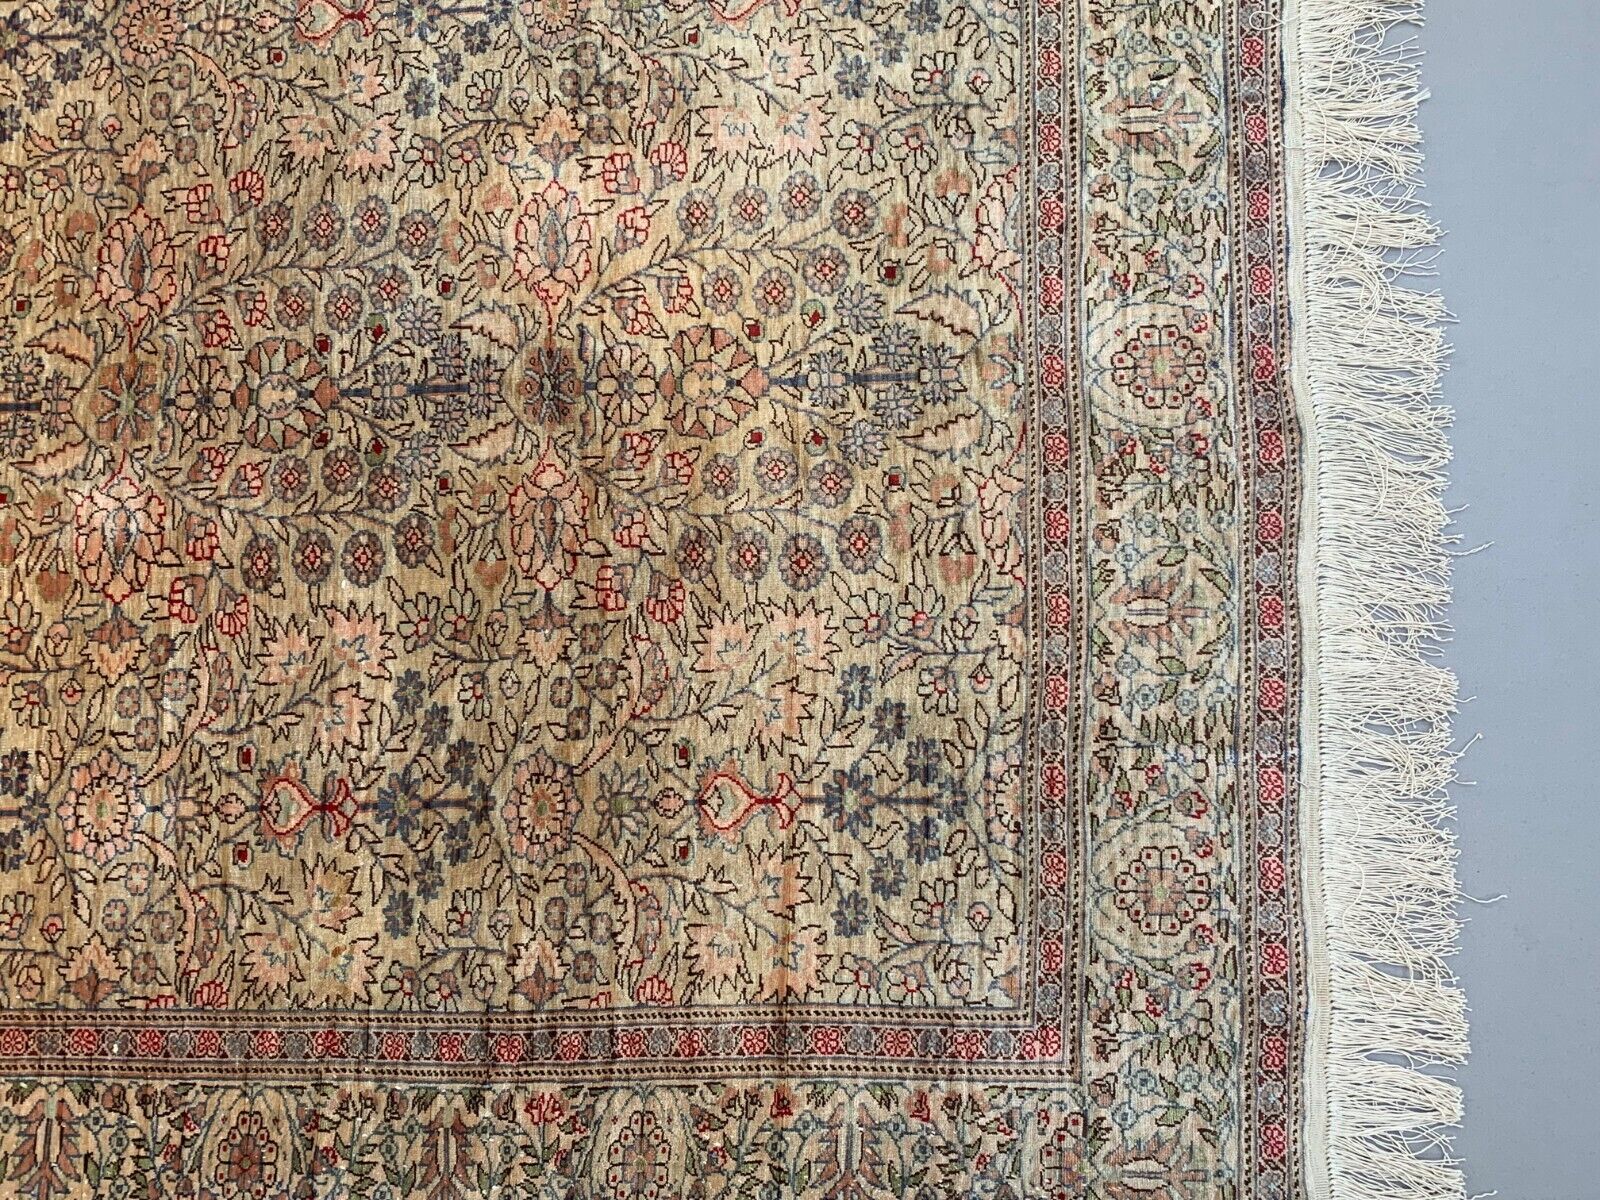 Vintage Turkish Silk Rug, 180x116 cm, Kayseri, Pink Blue Green, Handmade